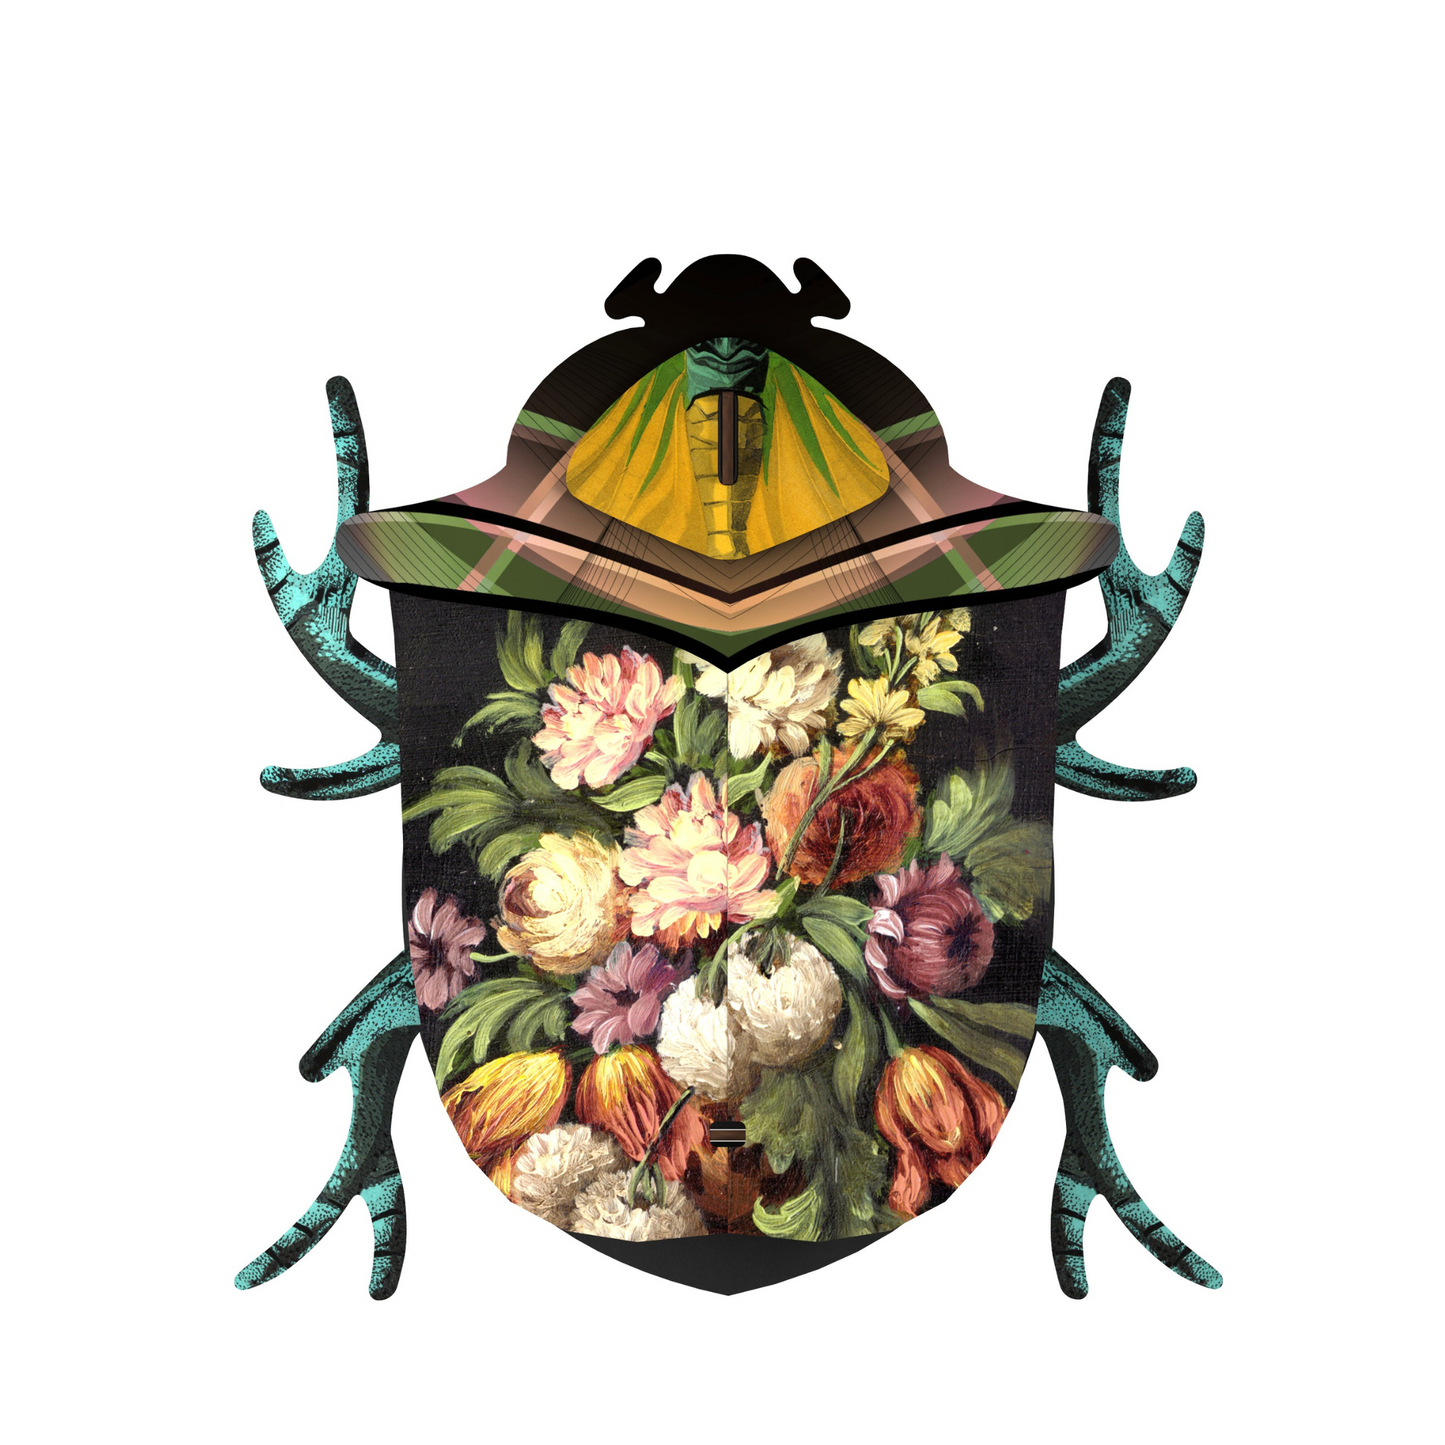 Keith | Beetle with Hidden Storage